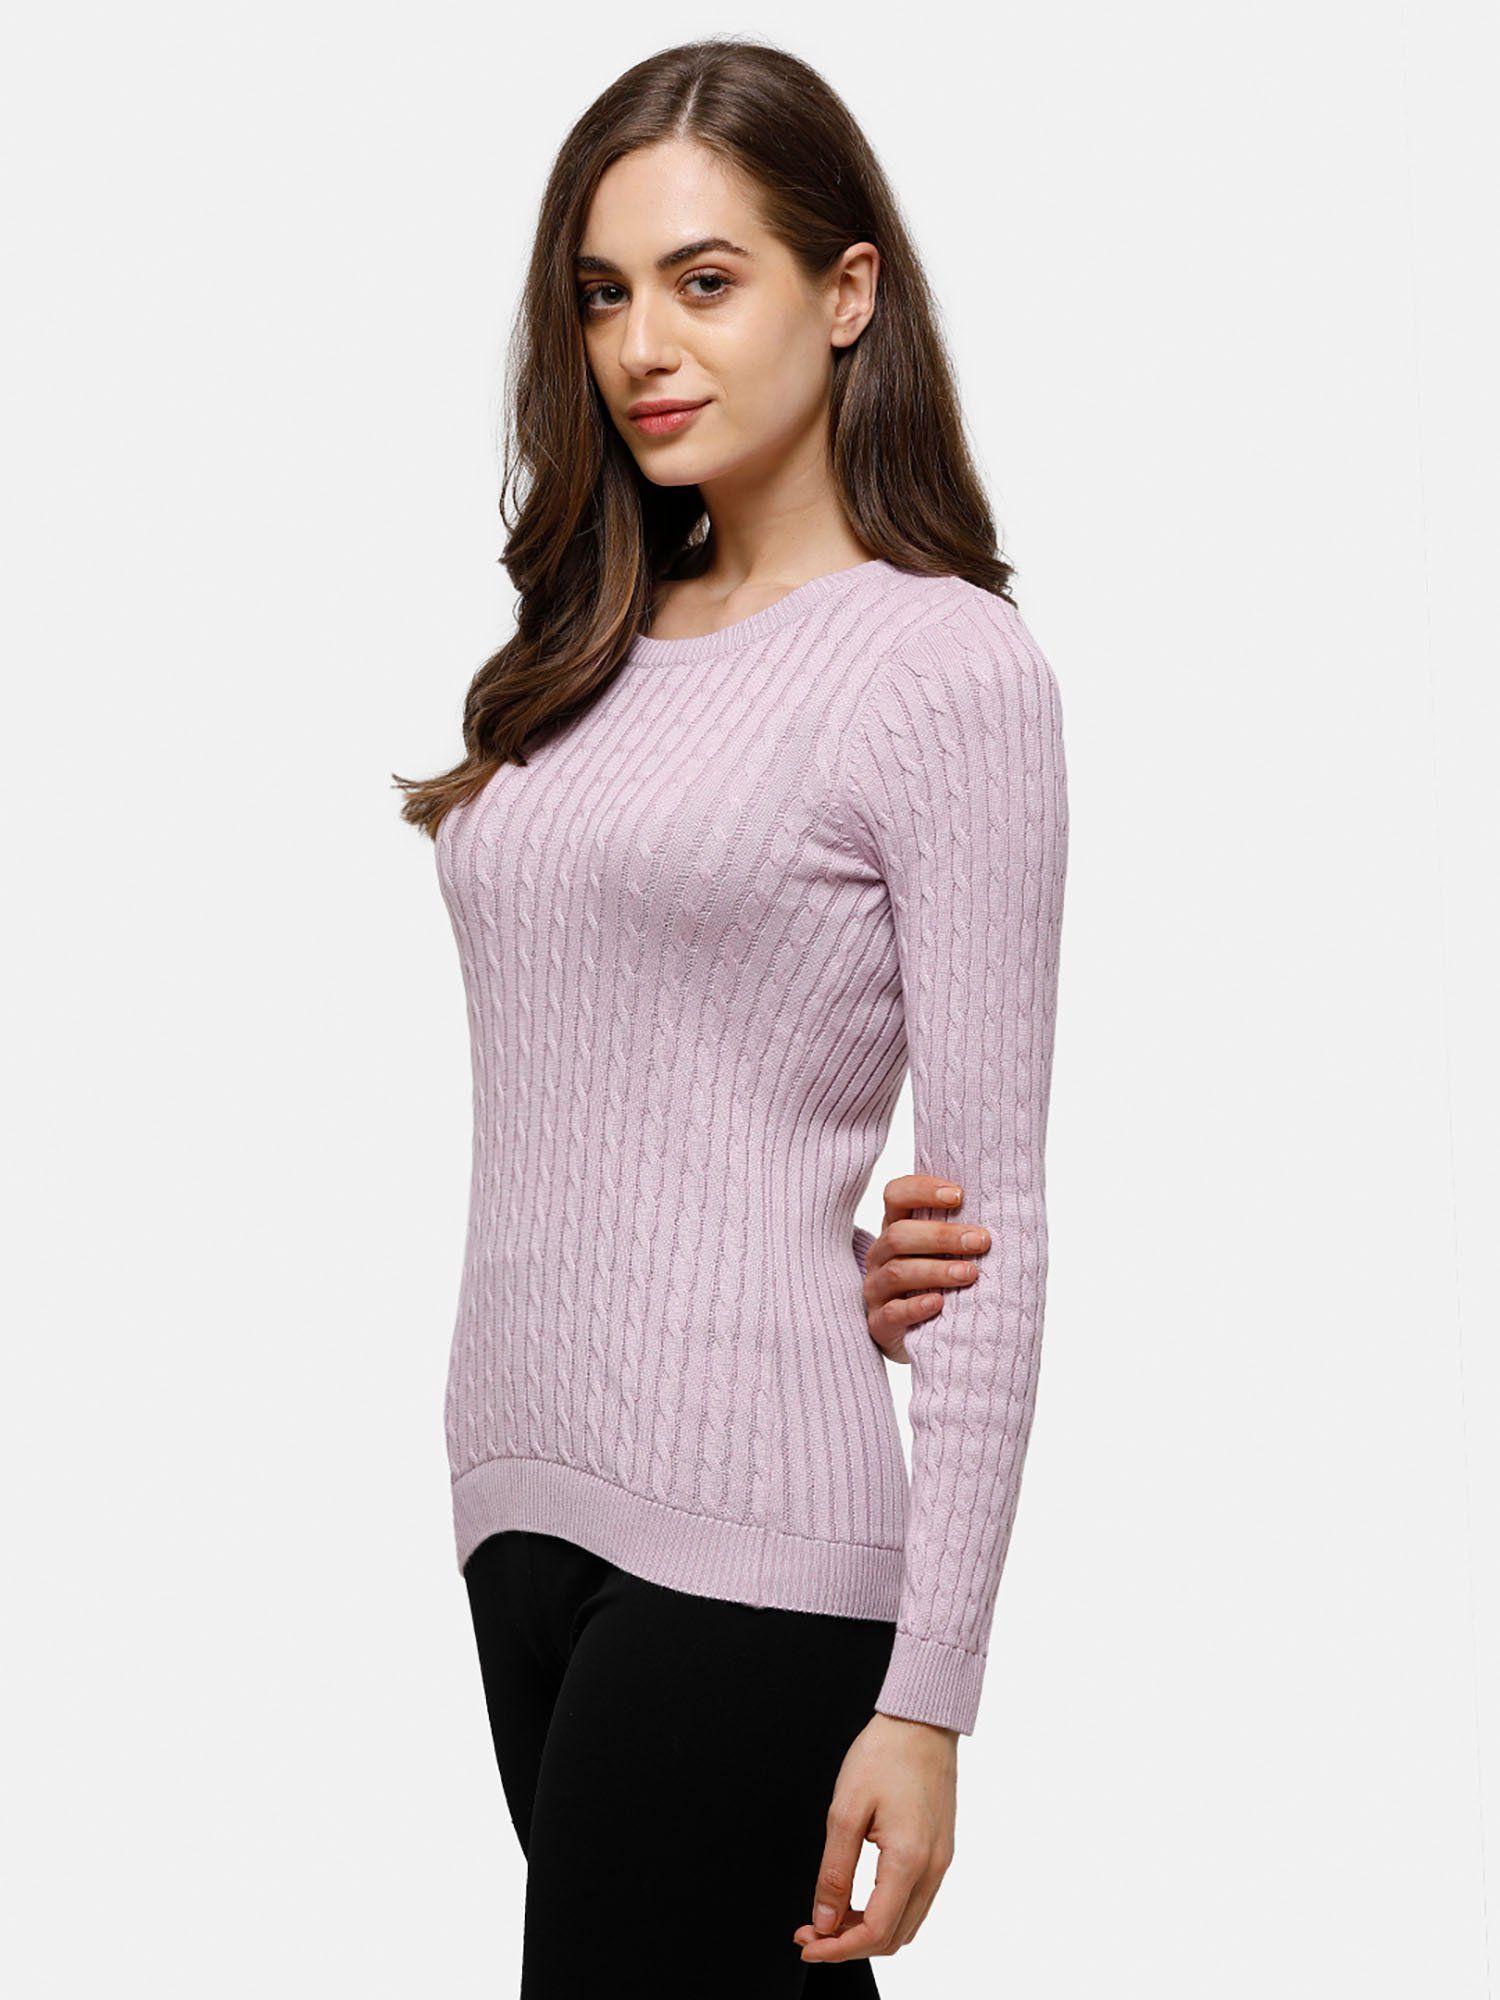 98 degree north's purple full sleeves sweater